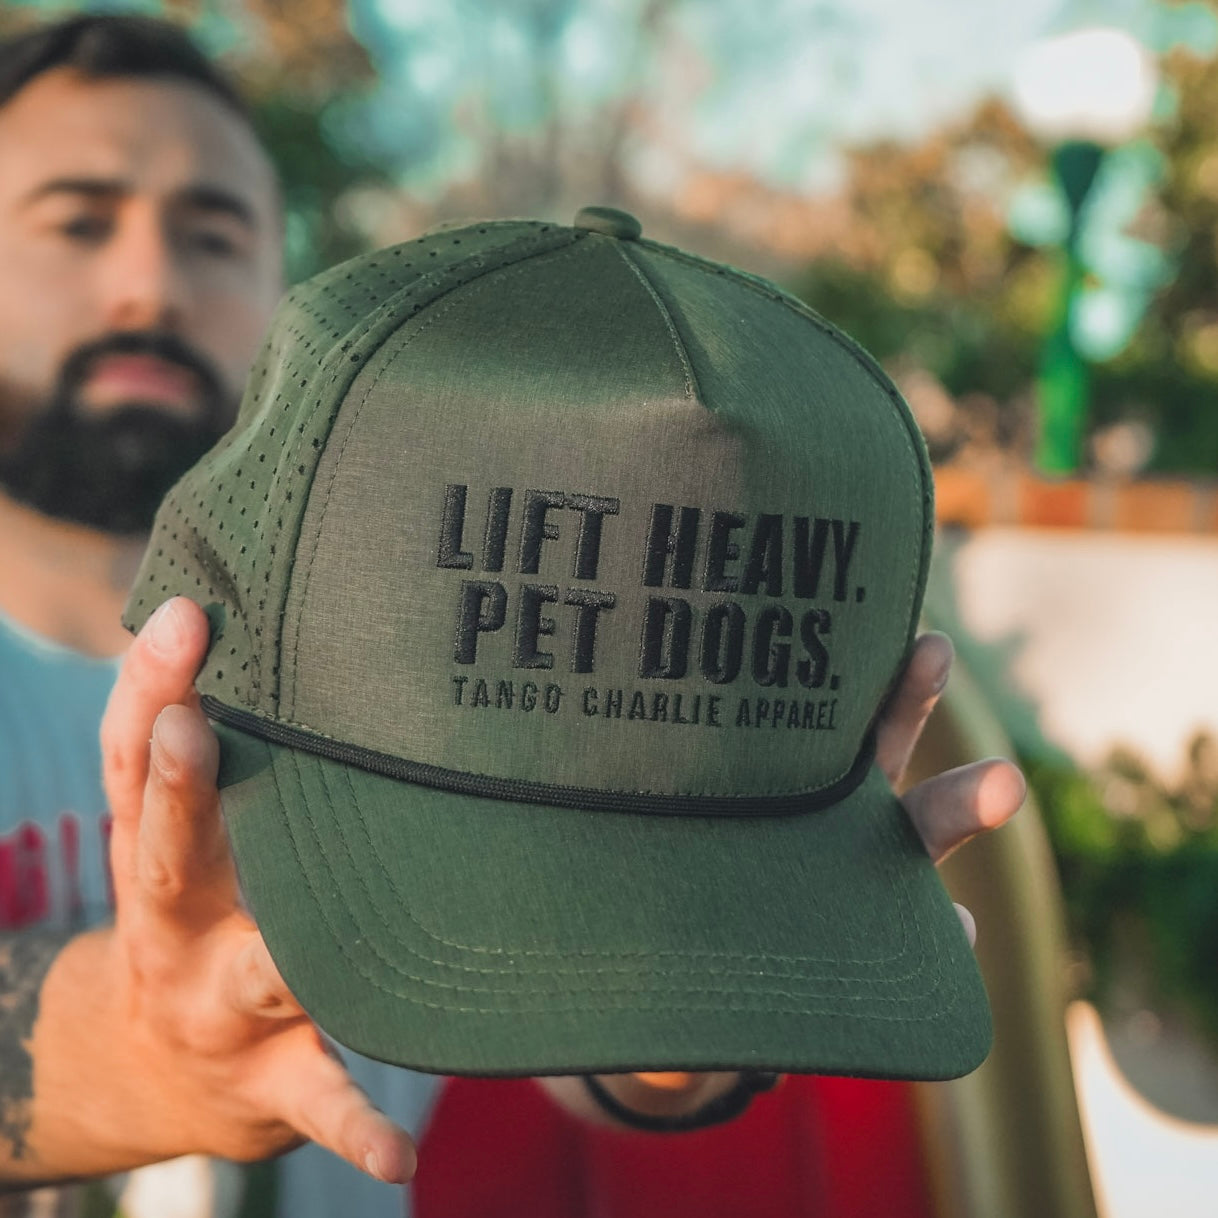 Lift Heavy. Pet Dogs. - Army Snapback Hat